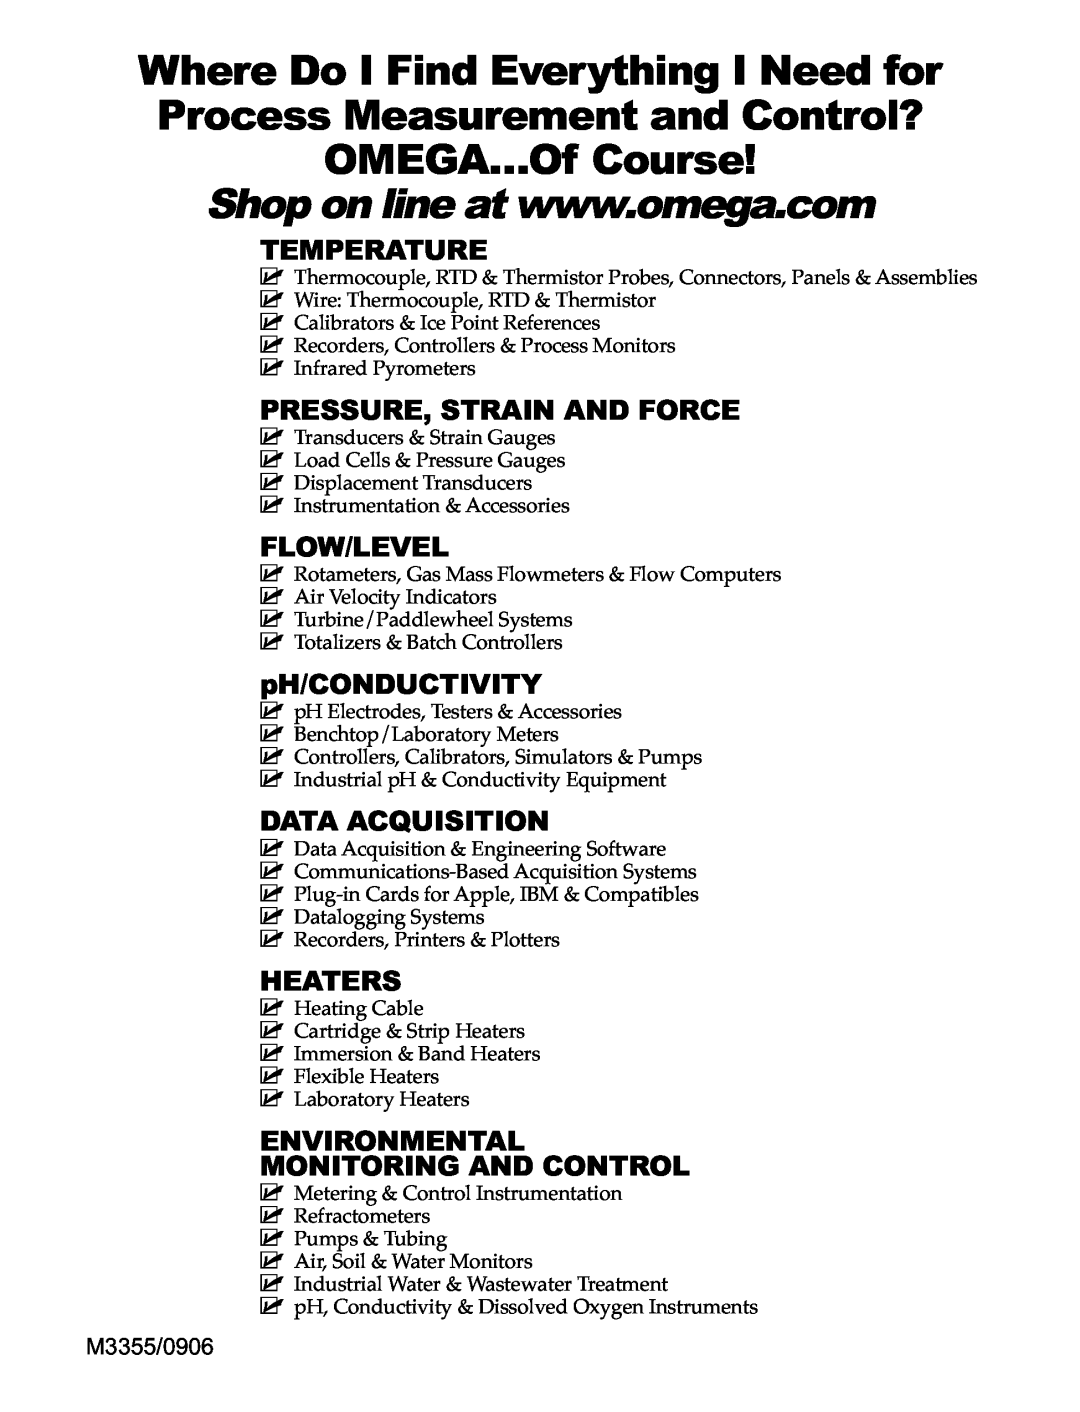 Omega CNI16D, CNI8 OMEGA…Of Course, Temperature, Pressure, Strain And Force, Flow/Level, pH/CONDUCTIVITY, Data Acquisition 